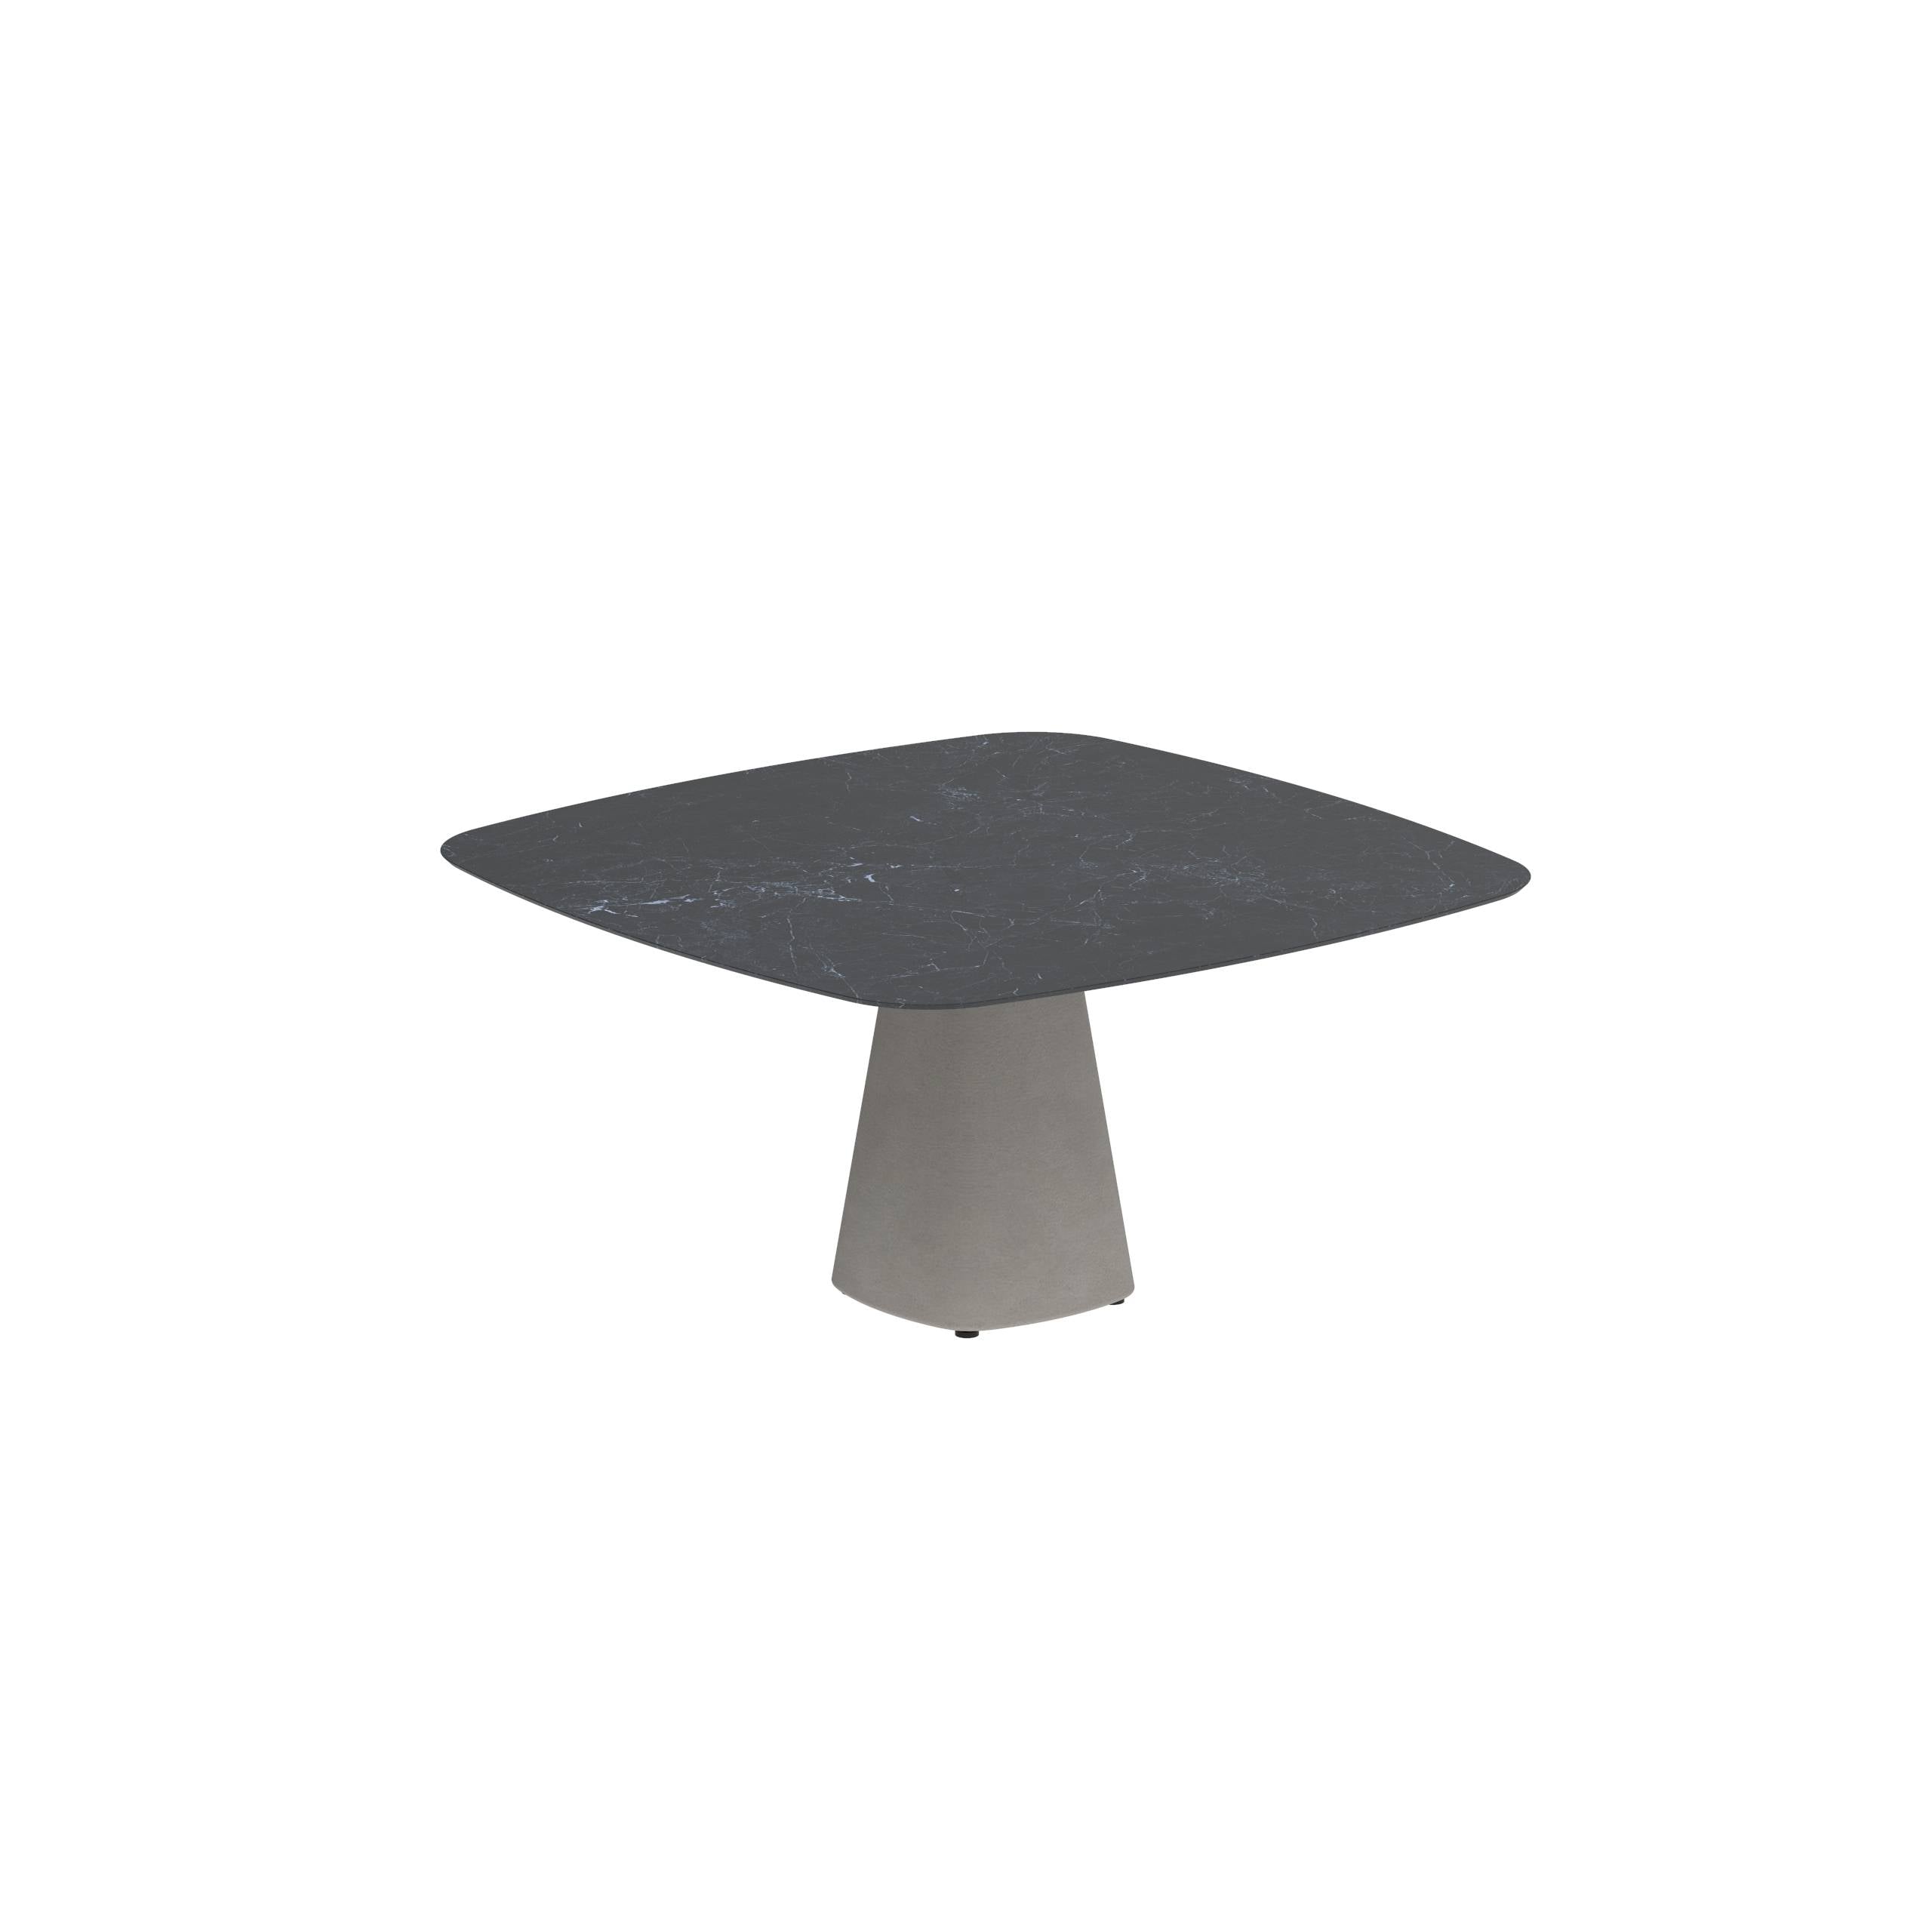 Conix Table 150x150 Cm Legs Concrete Cement Grey - Table Top Ceramic Nero Marquina